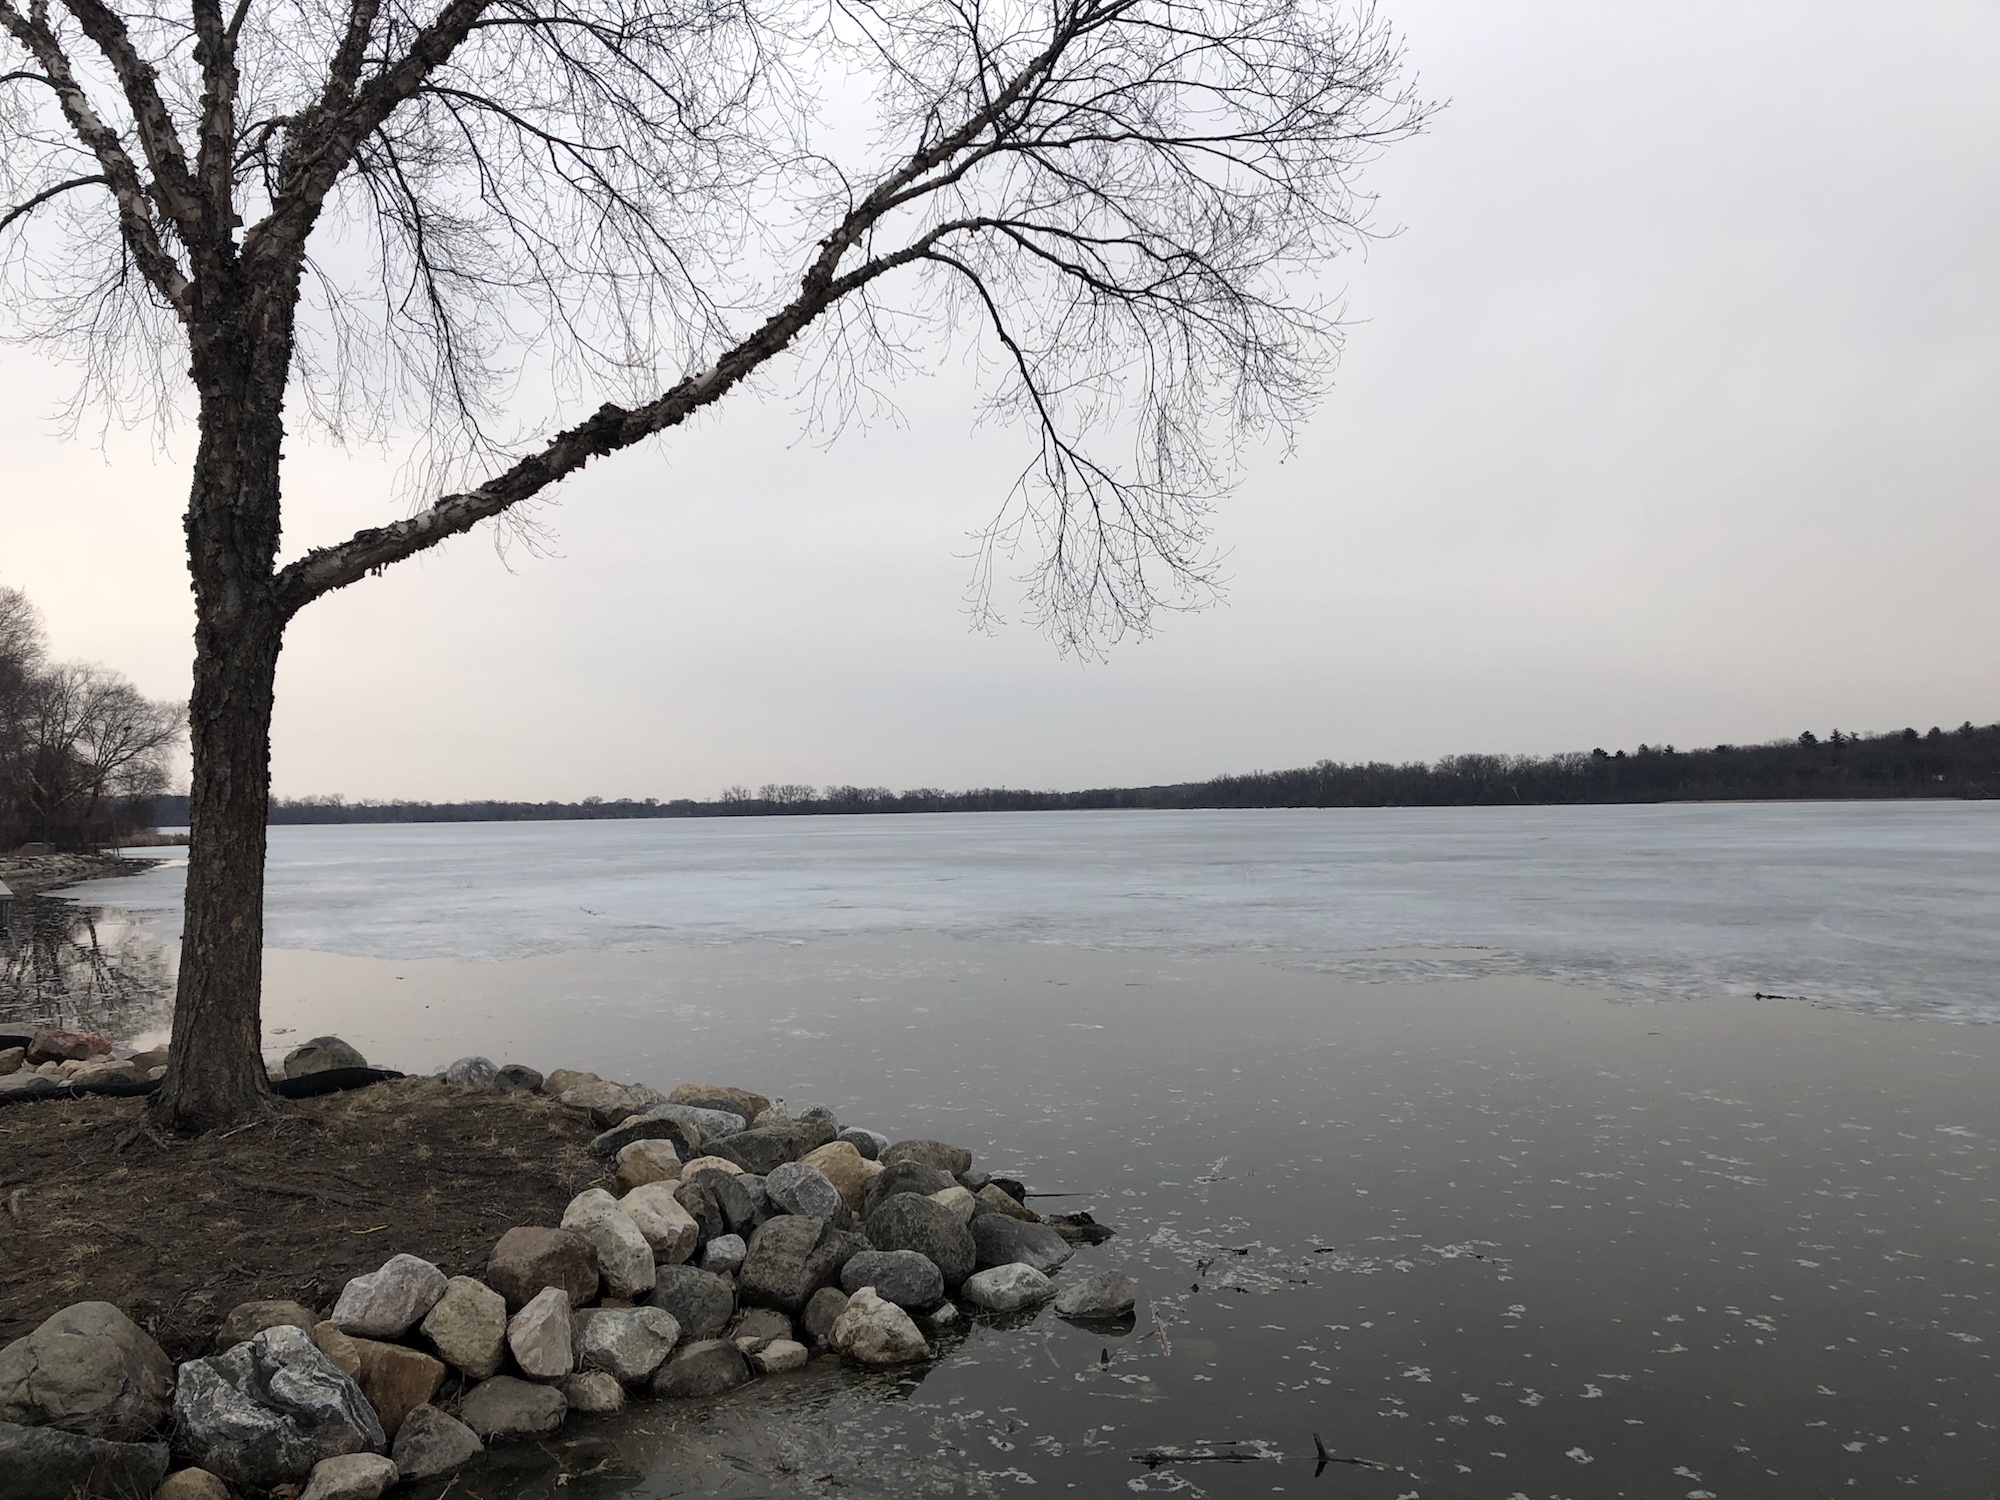 Lake Wingra on March 24, 2019.